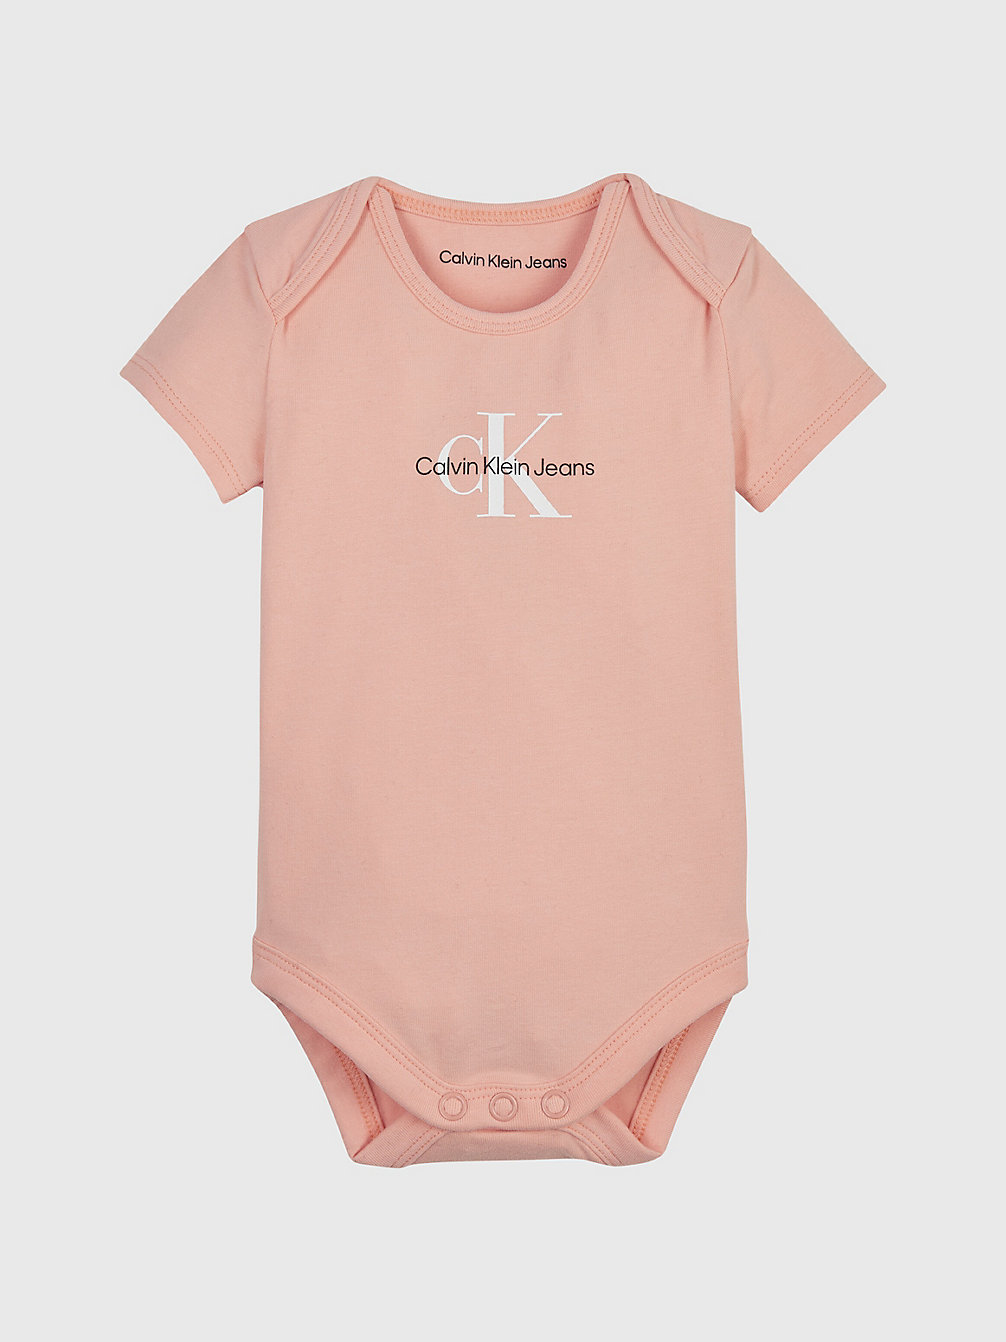 FRESH CANTALOUPE Newborn Logo Bodysuit undefined newborn Calvin Klein